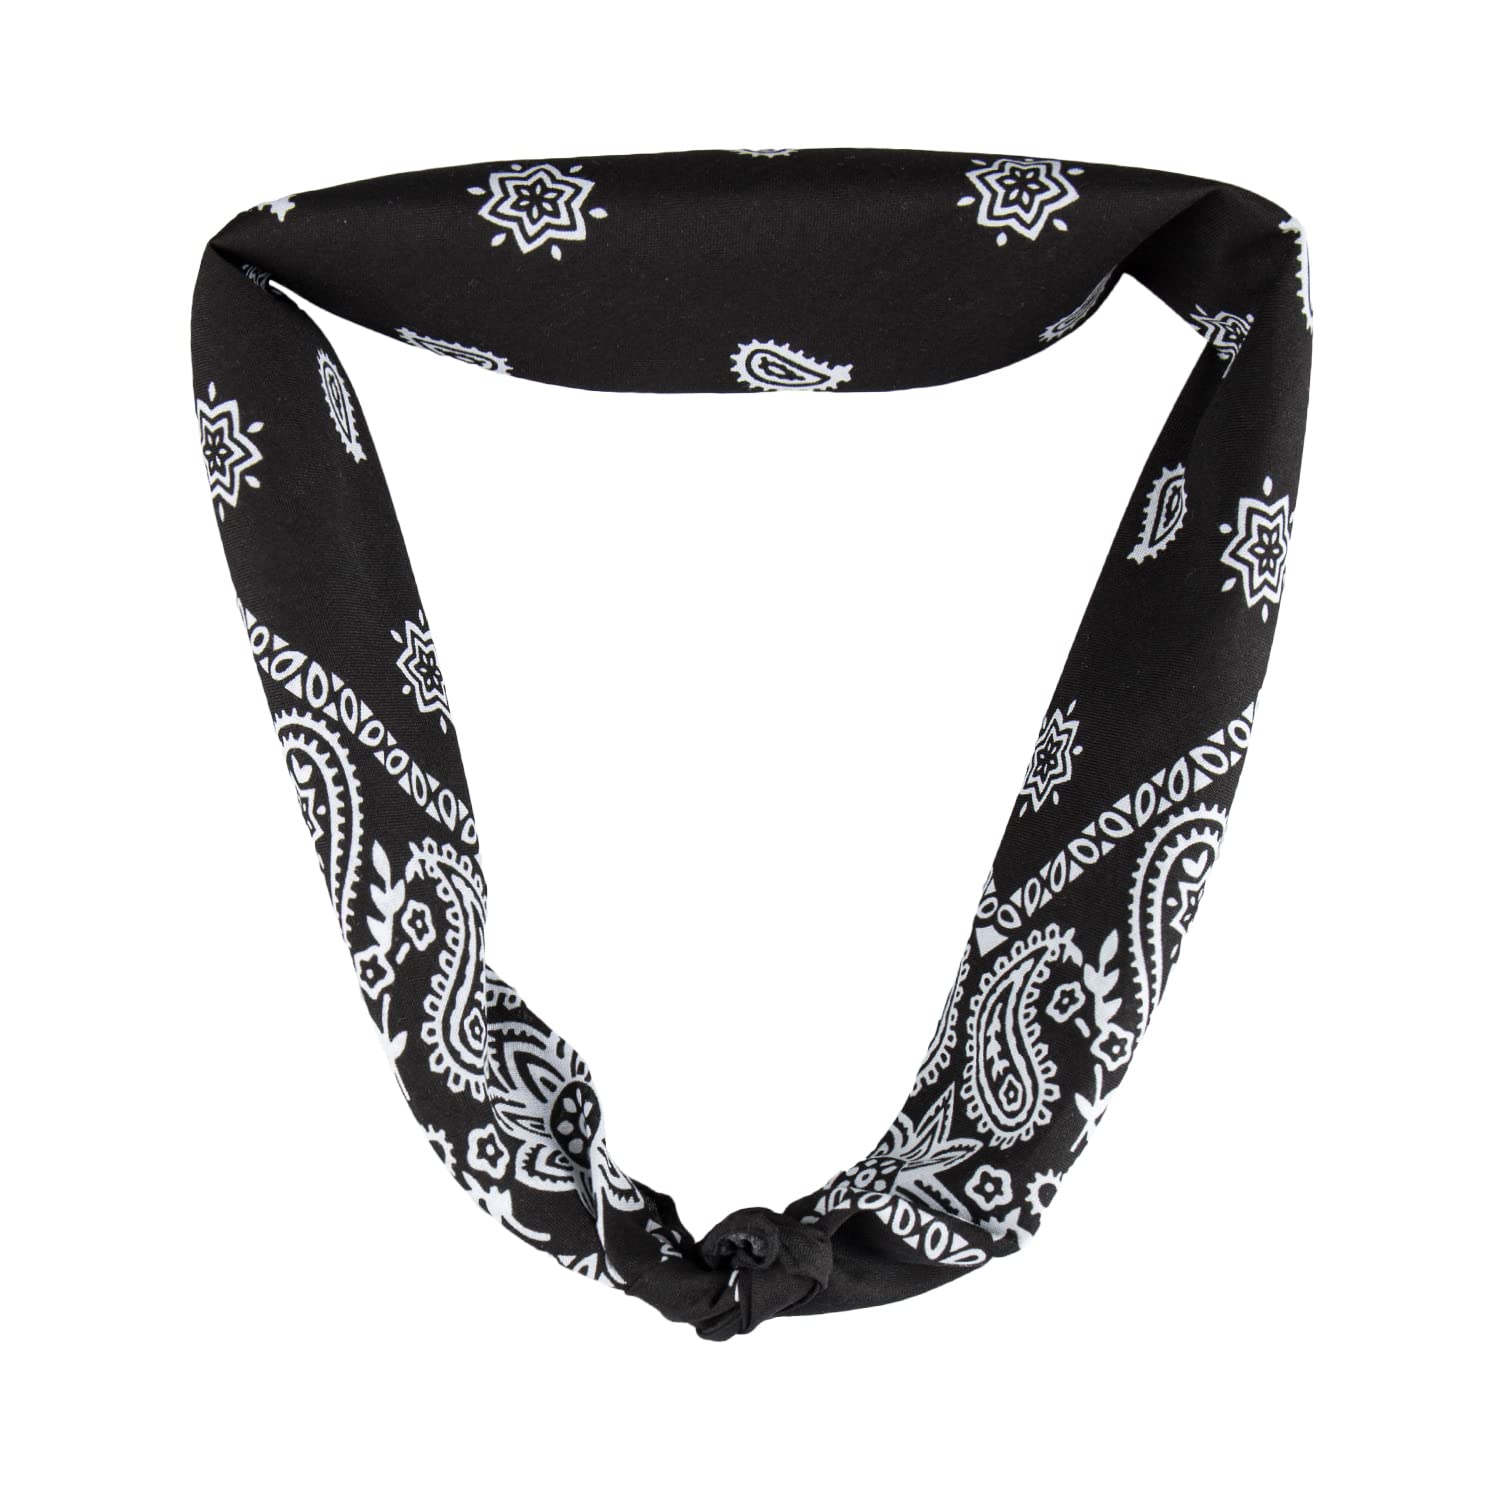 Levi’s All-Gender Multi-Purpose Bandana Gift Sets - Headband, Wrap, Protective Coverage